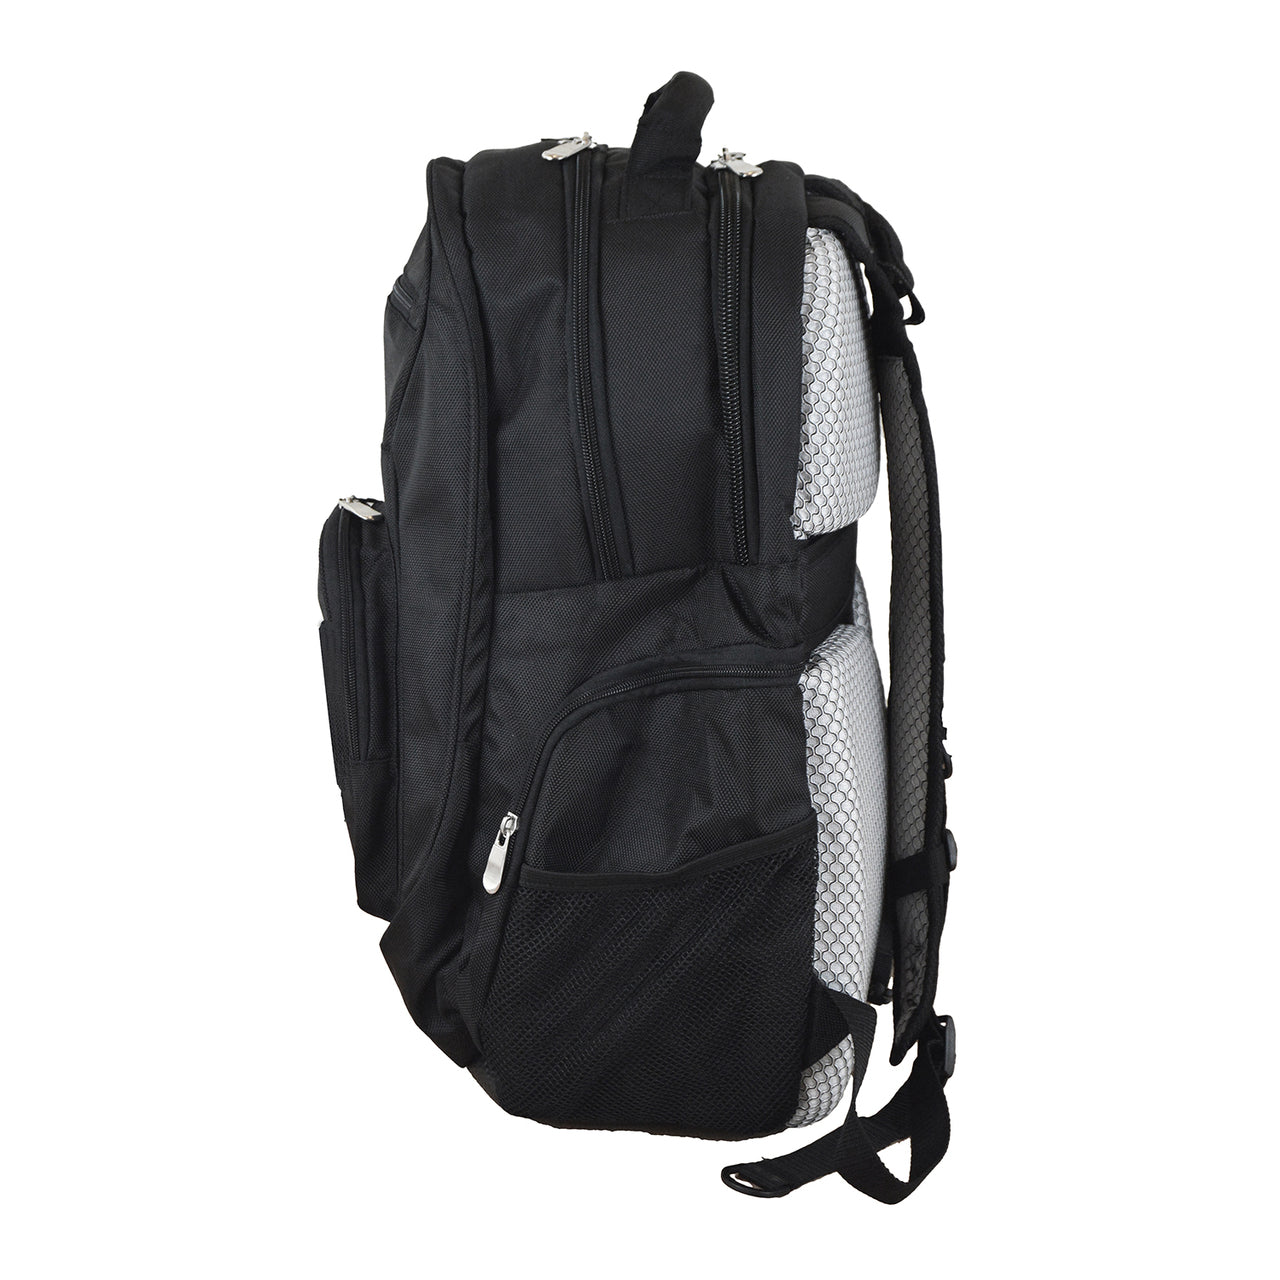 Boise State Broncos Laptop Backpack in Black